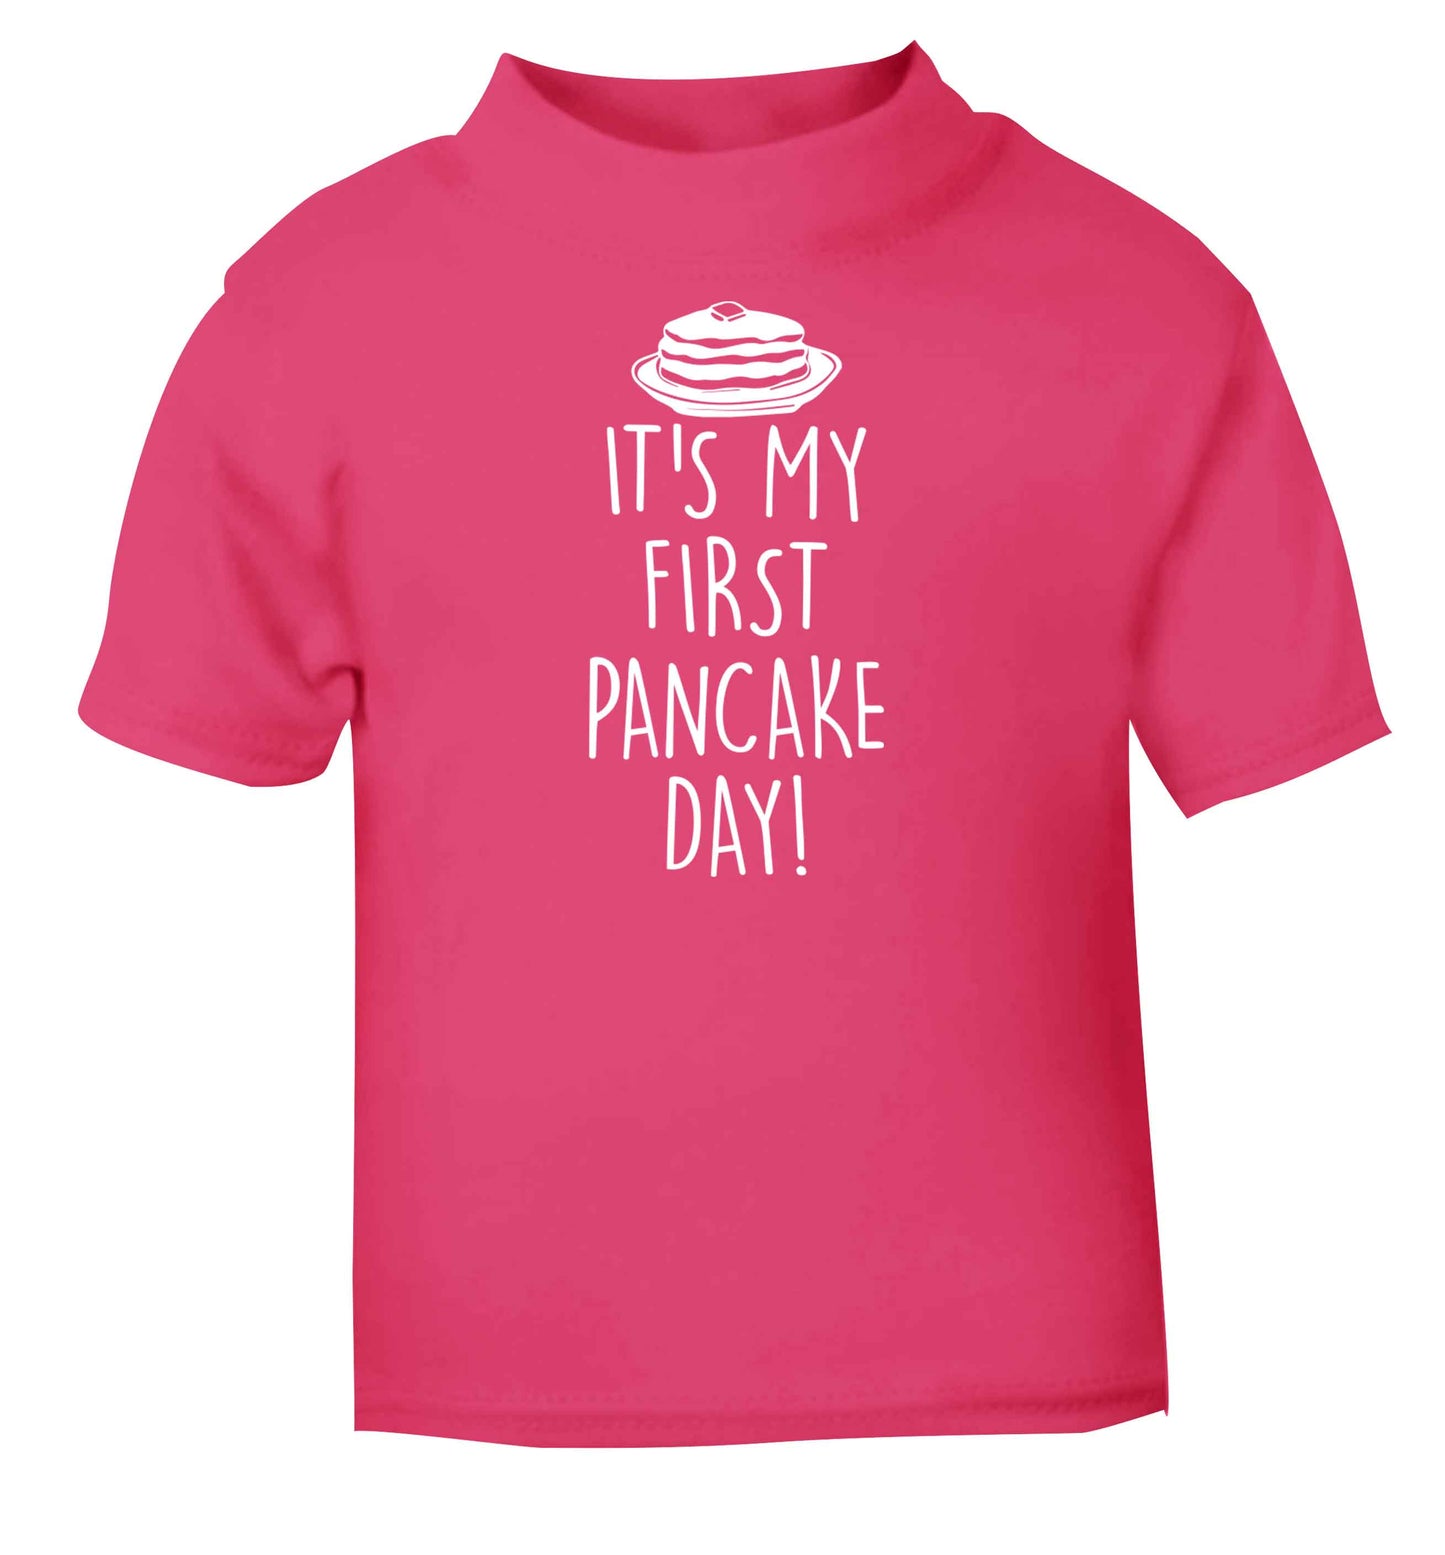 It's my first pancake day pink baby toddler Tshirt 2 Years